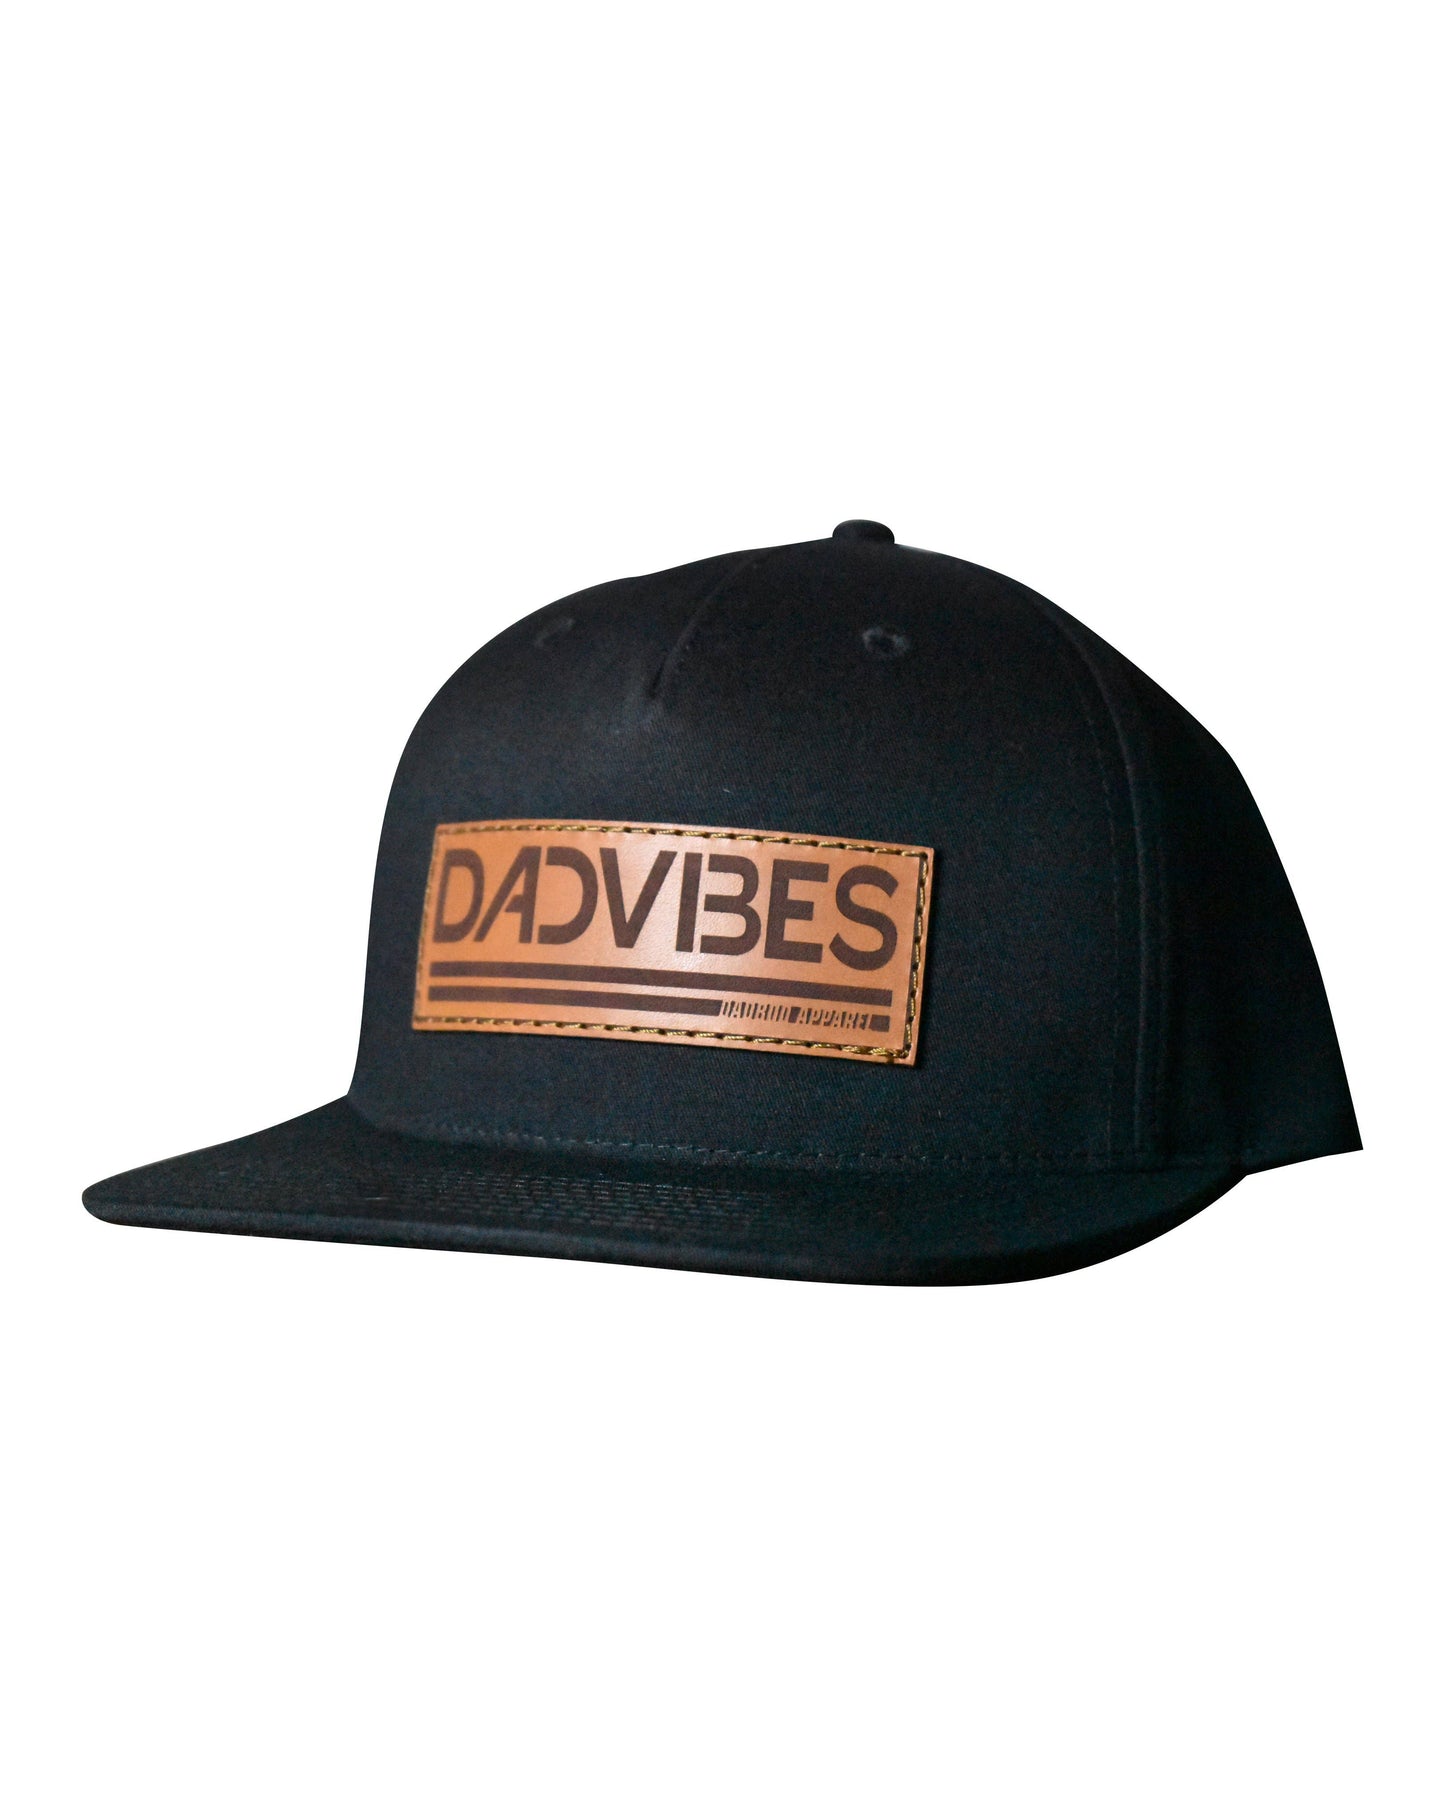 DadVibes Classic - LOW PROFILE Snapback (Black) - Nubian Lane Hat Co. 